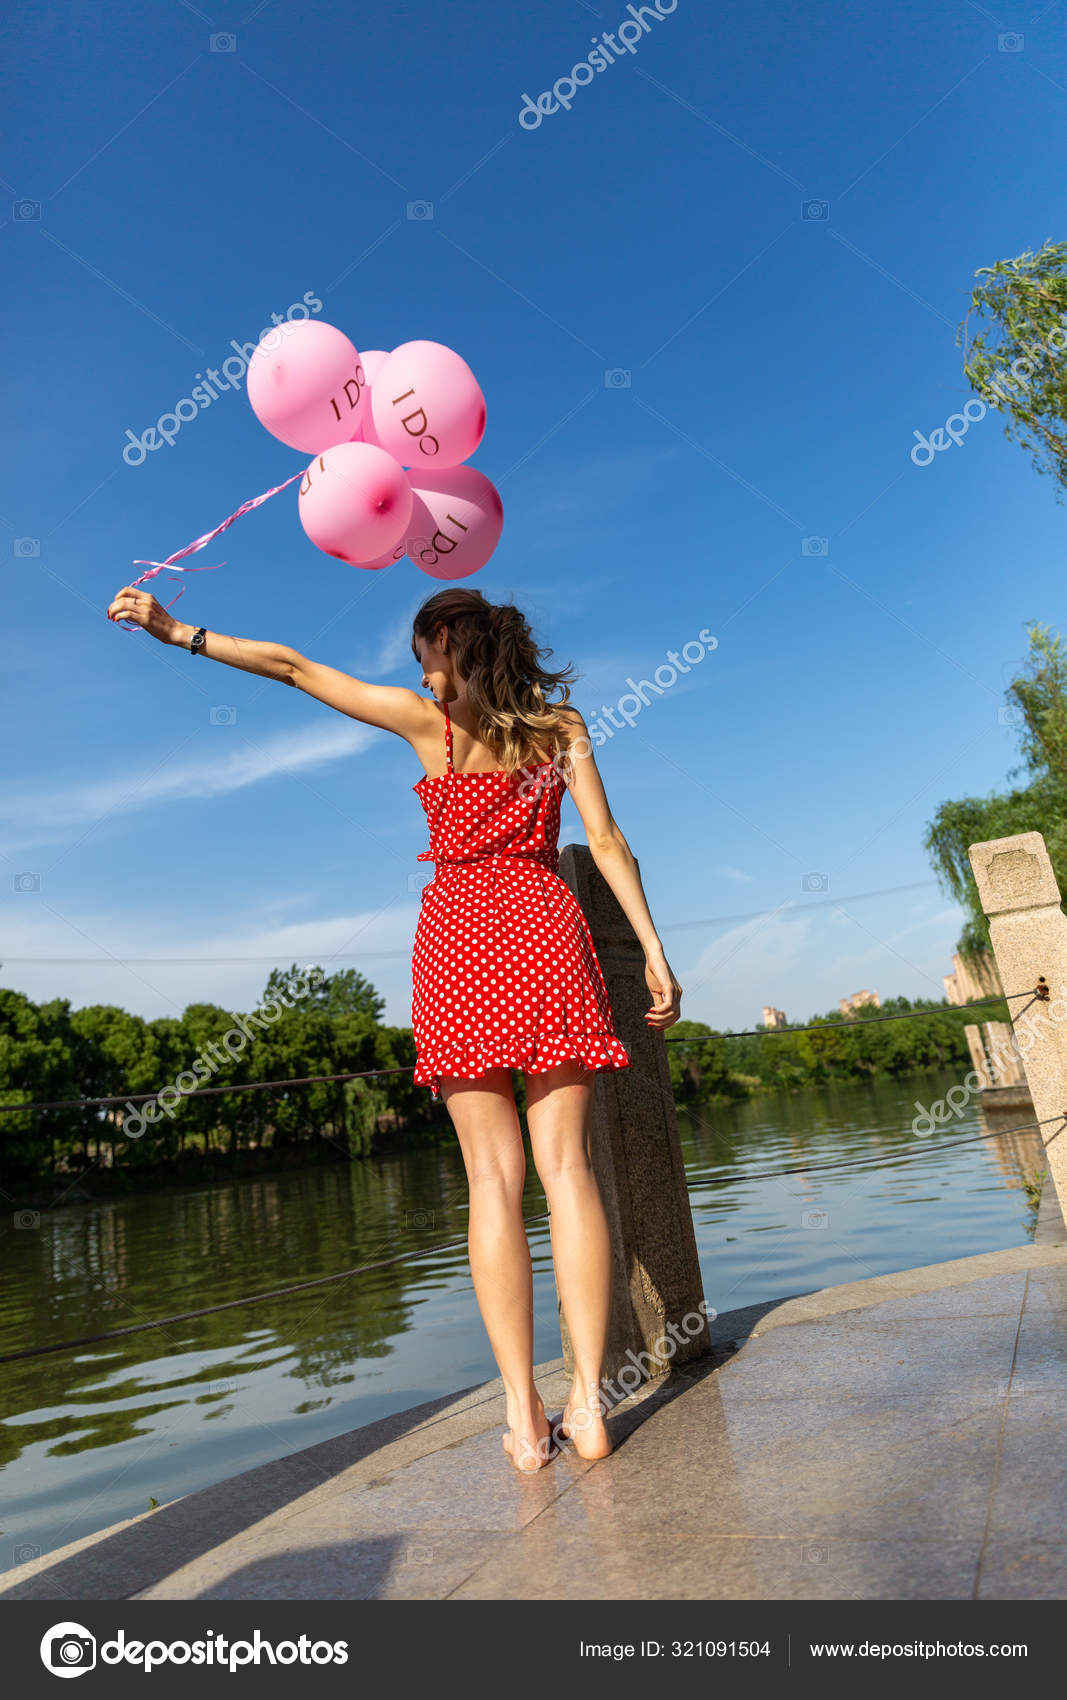 https://st3.depositphotos.com/27614600/32109/i/1600/depositphotos_321091504-stock-photo-portrait-girl-pink-balloons.jpg